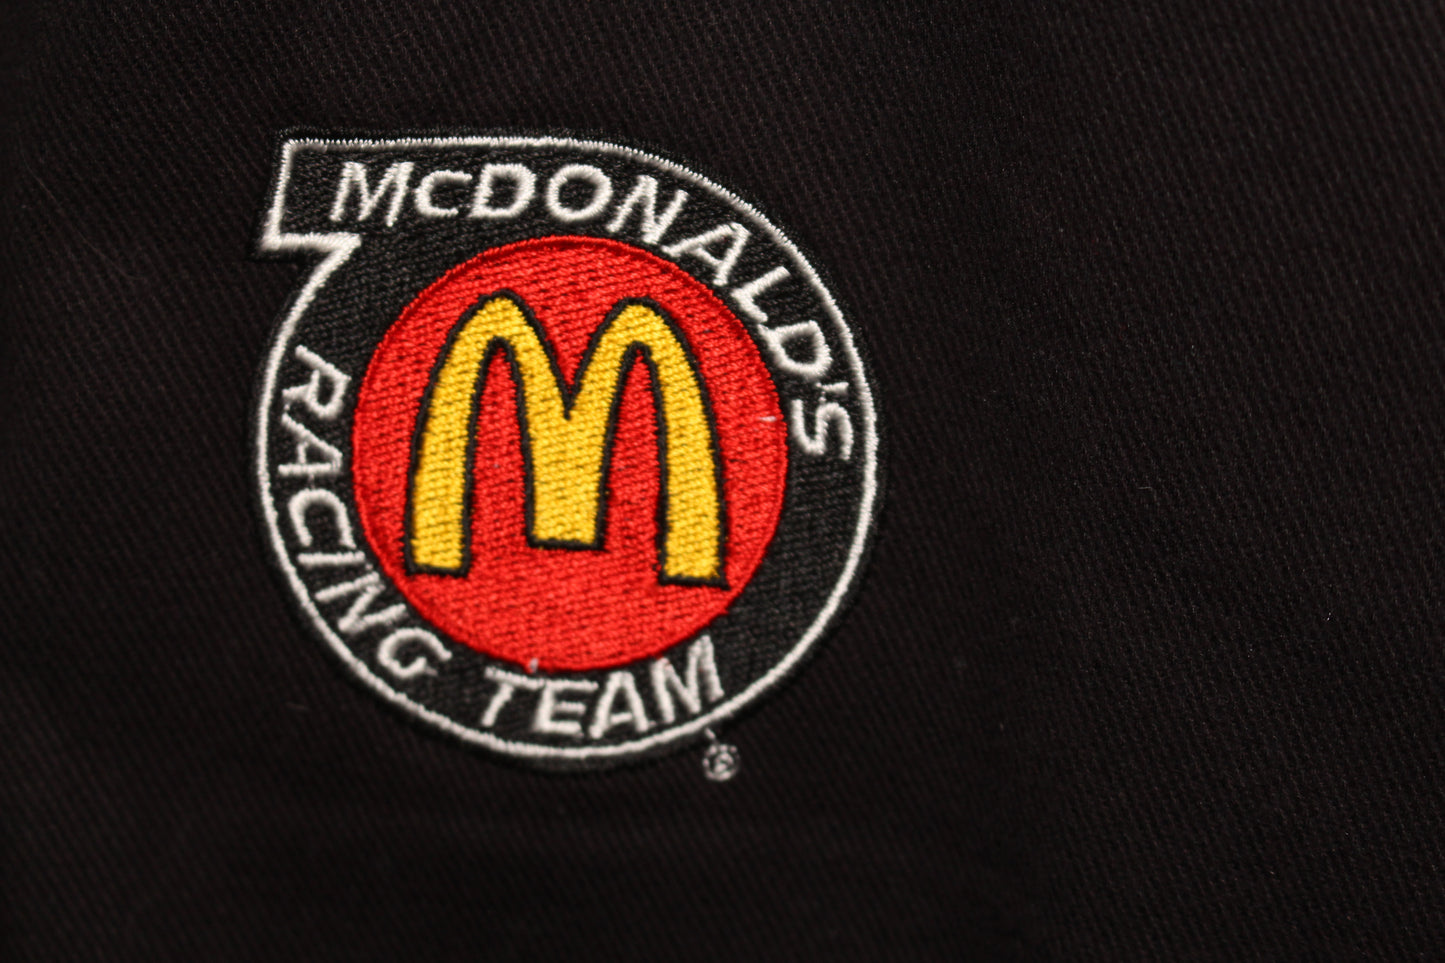 McDonald’s Racing NASCAR Retro Twill Jacket (L)